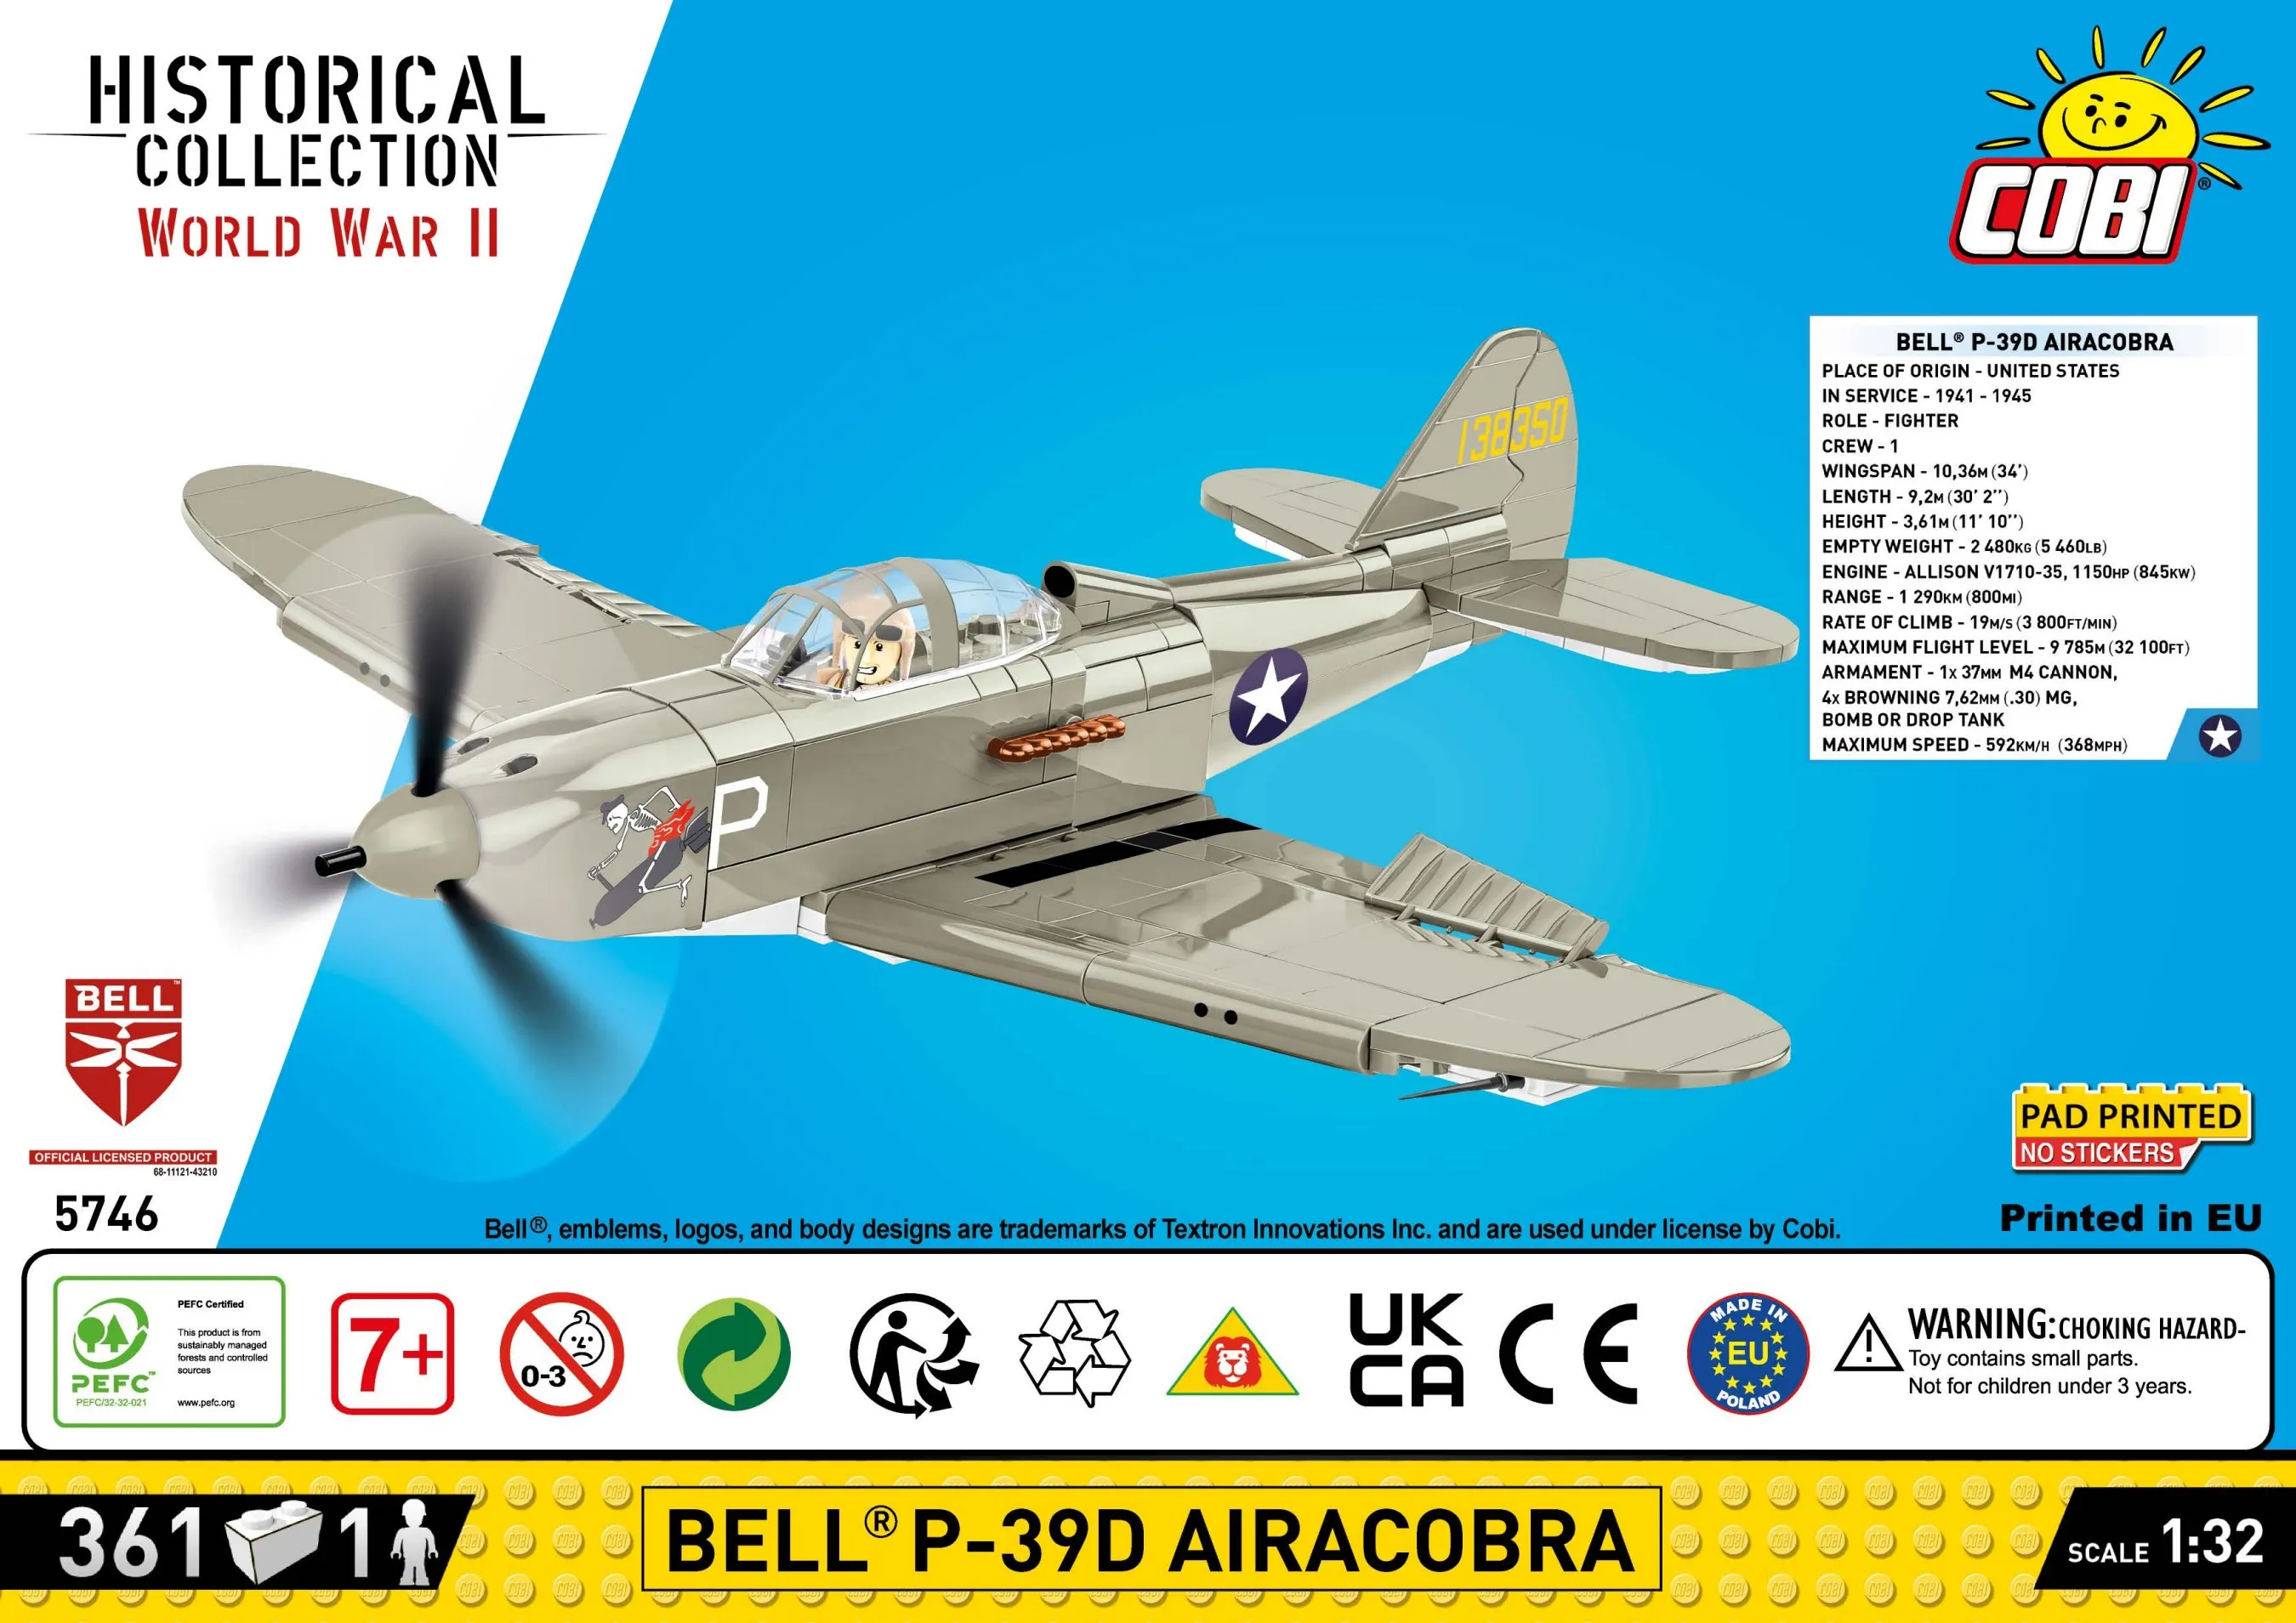 Cobi - Historical Collection World War II Bell P-39D Airacobra Whit | Set 5746